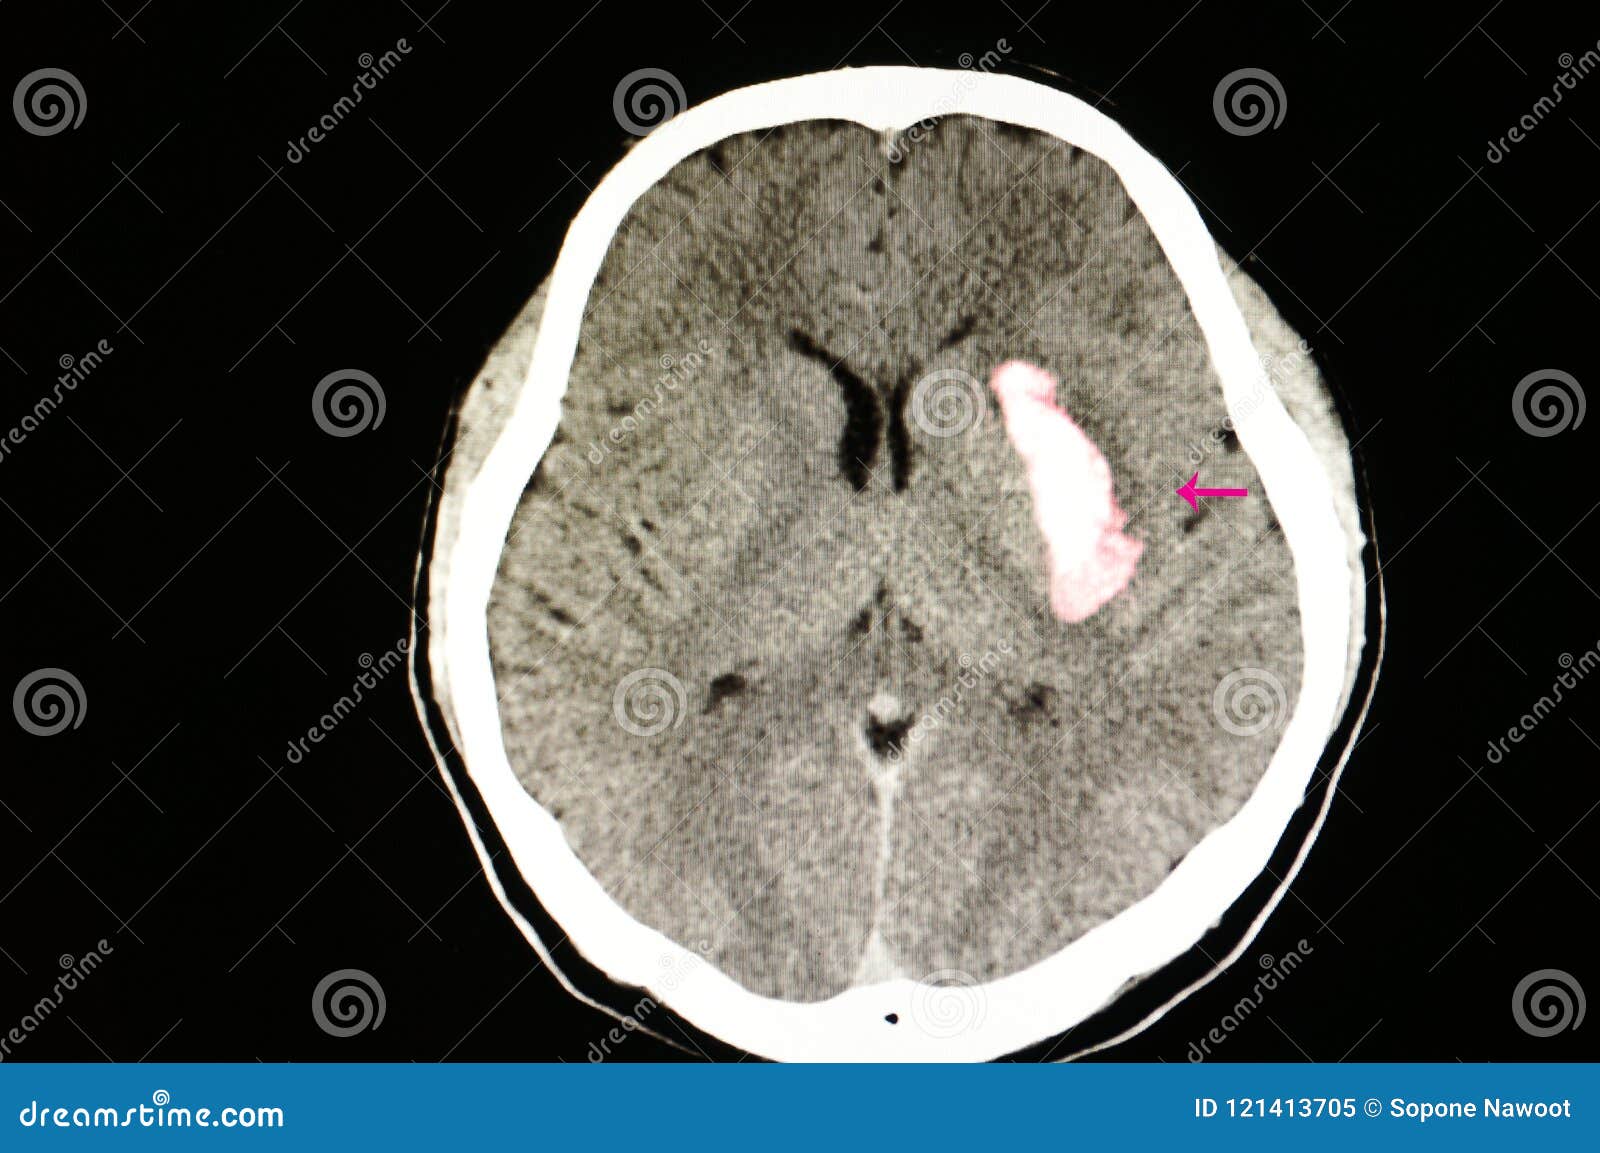 large intracerebral hematoma